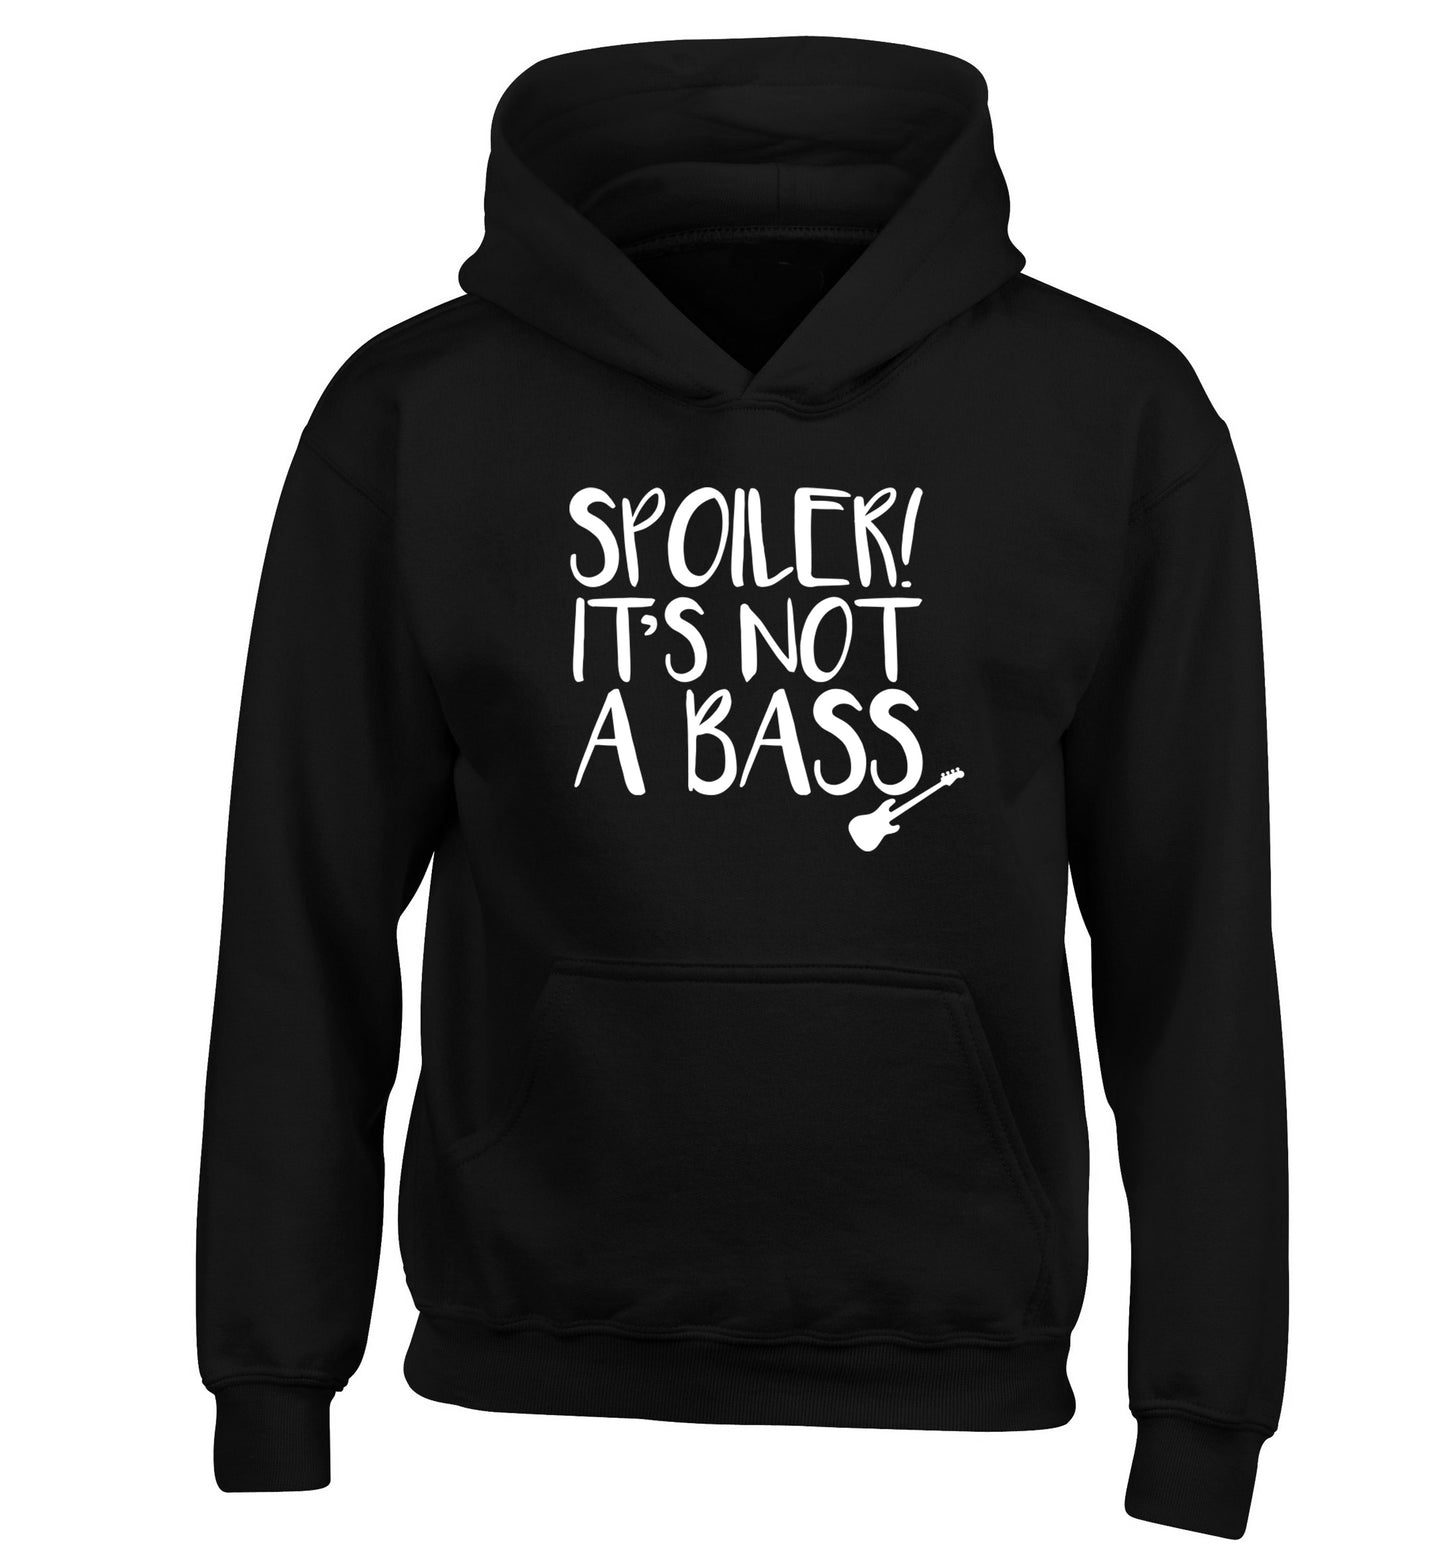 Spoiler it's not a bass children's black hoodie 12-13 Years